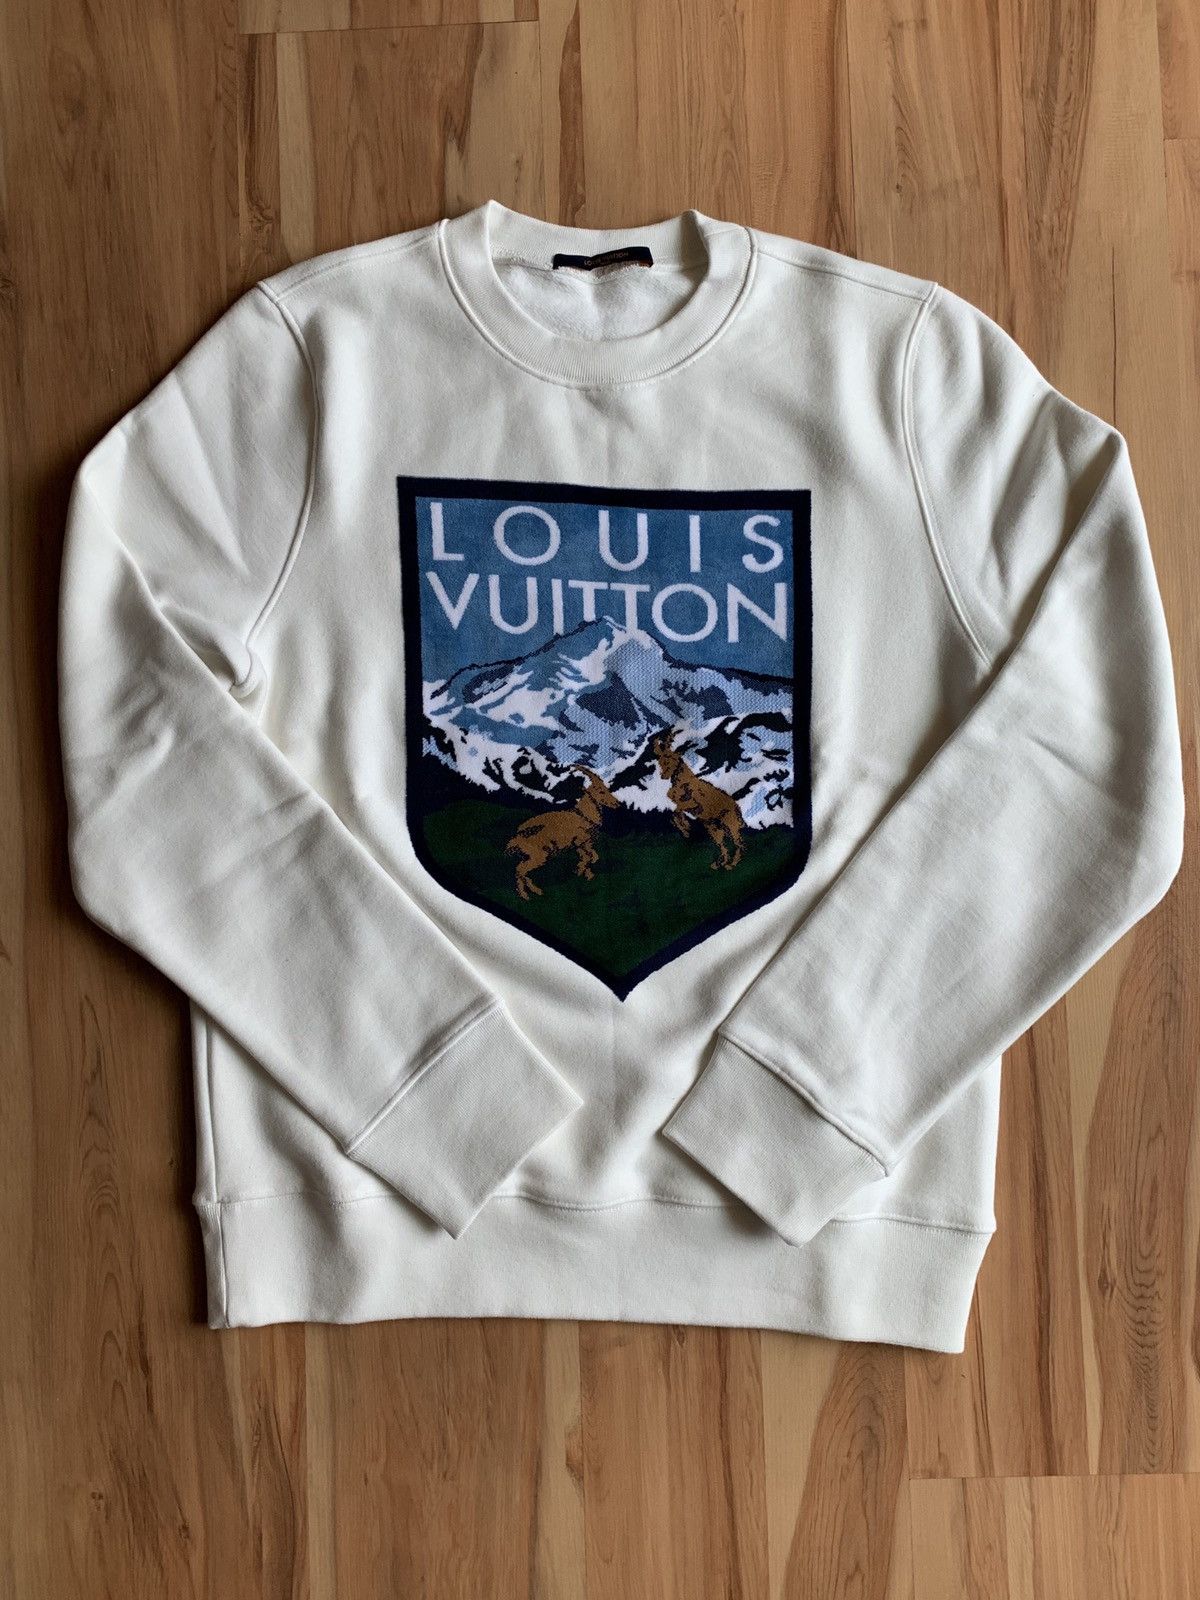 Louis Vuitton Louis Vuitton Sweatshirt | Grailed